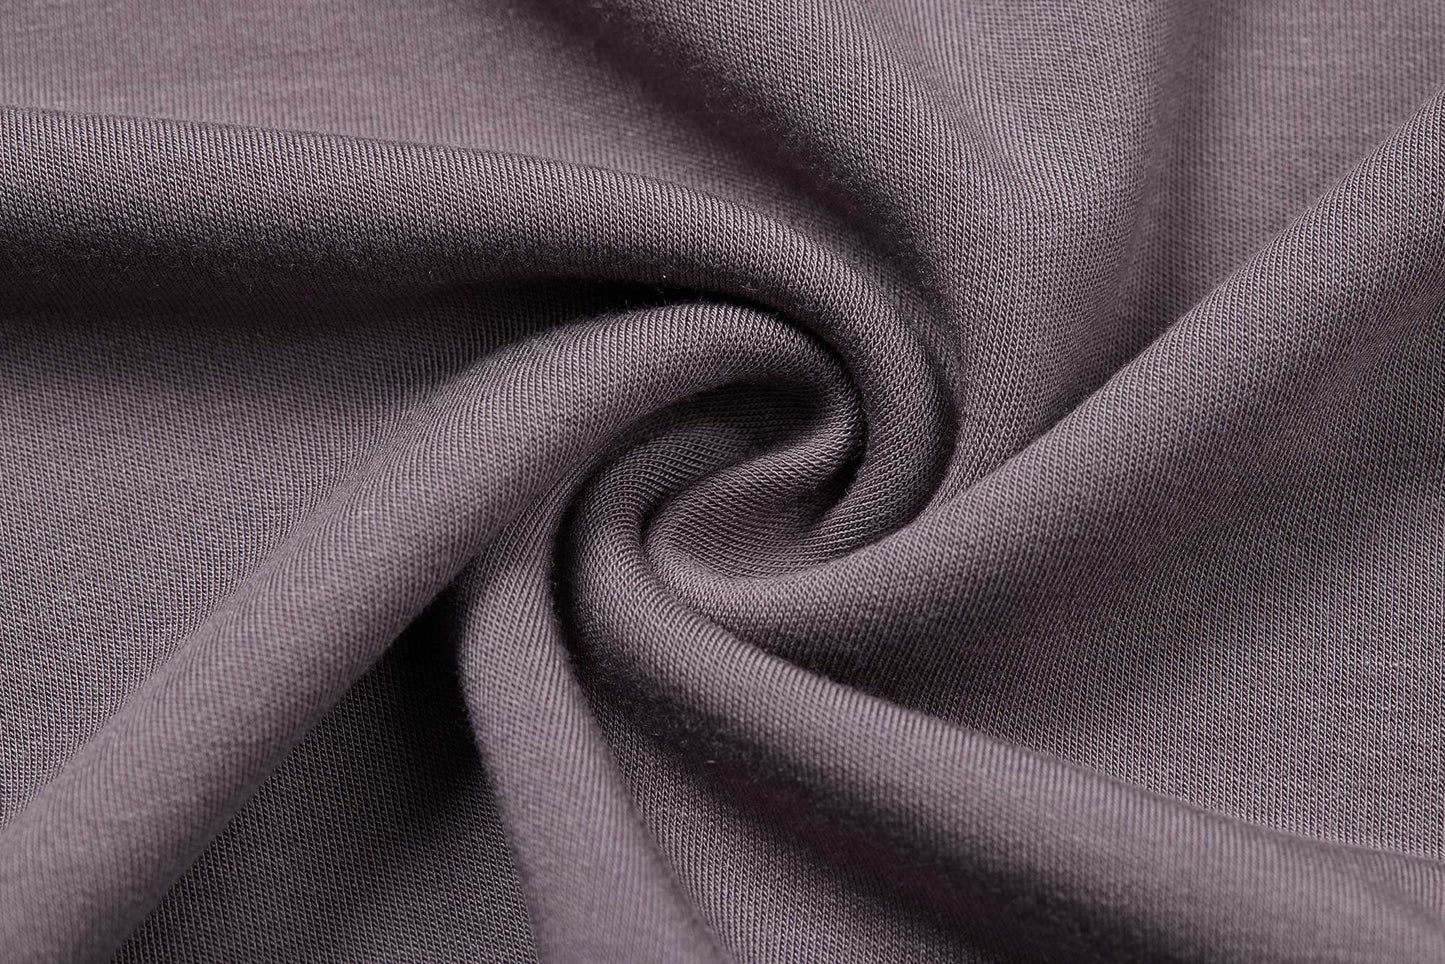 Details of the purple dress